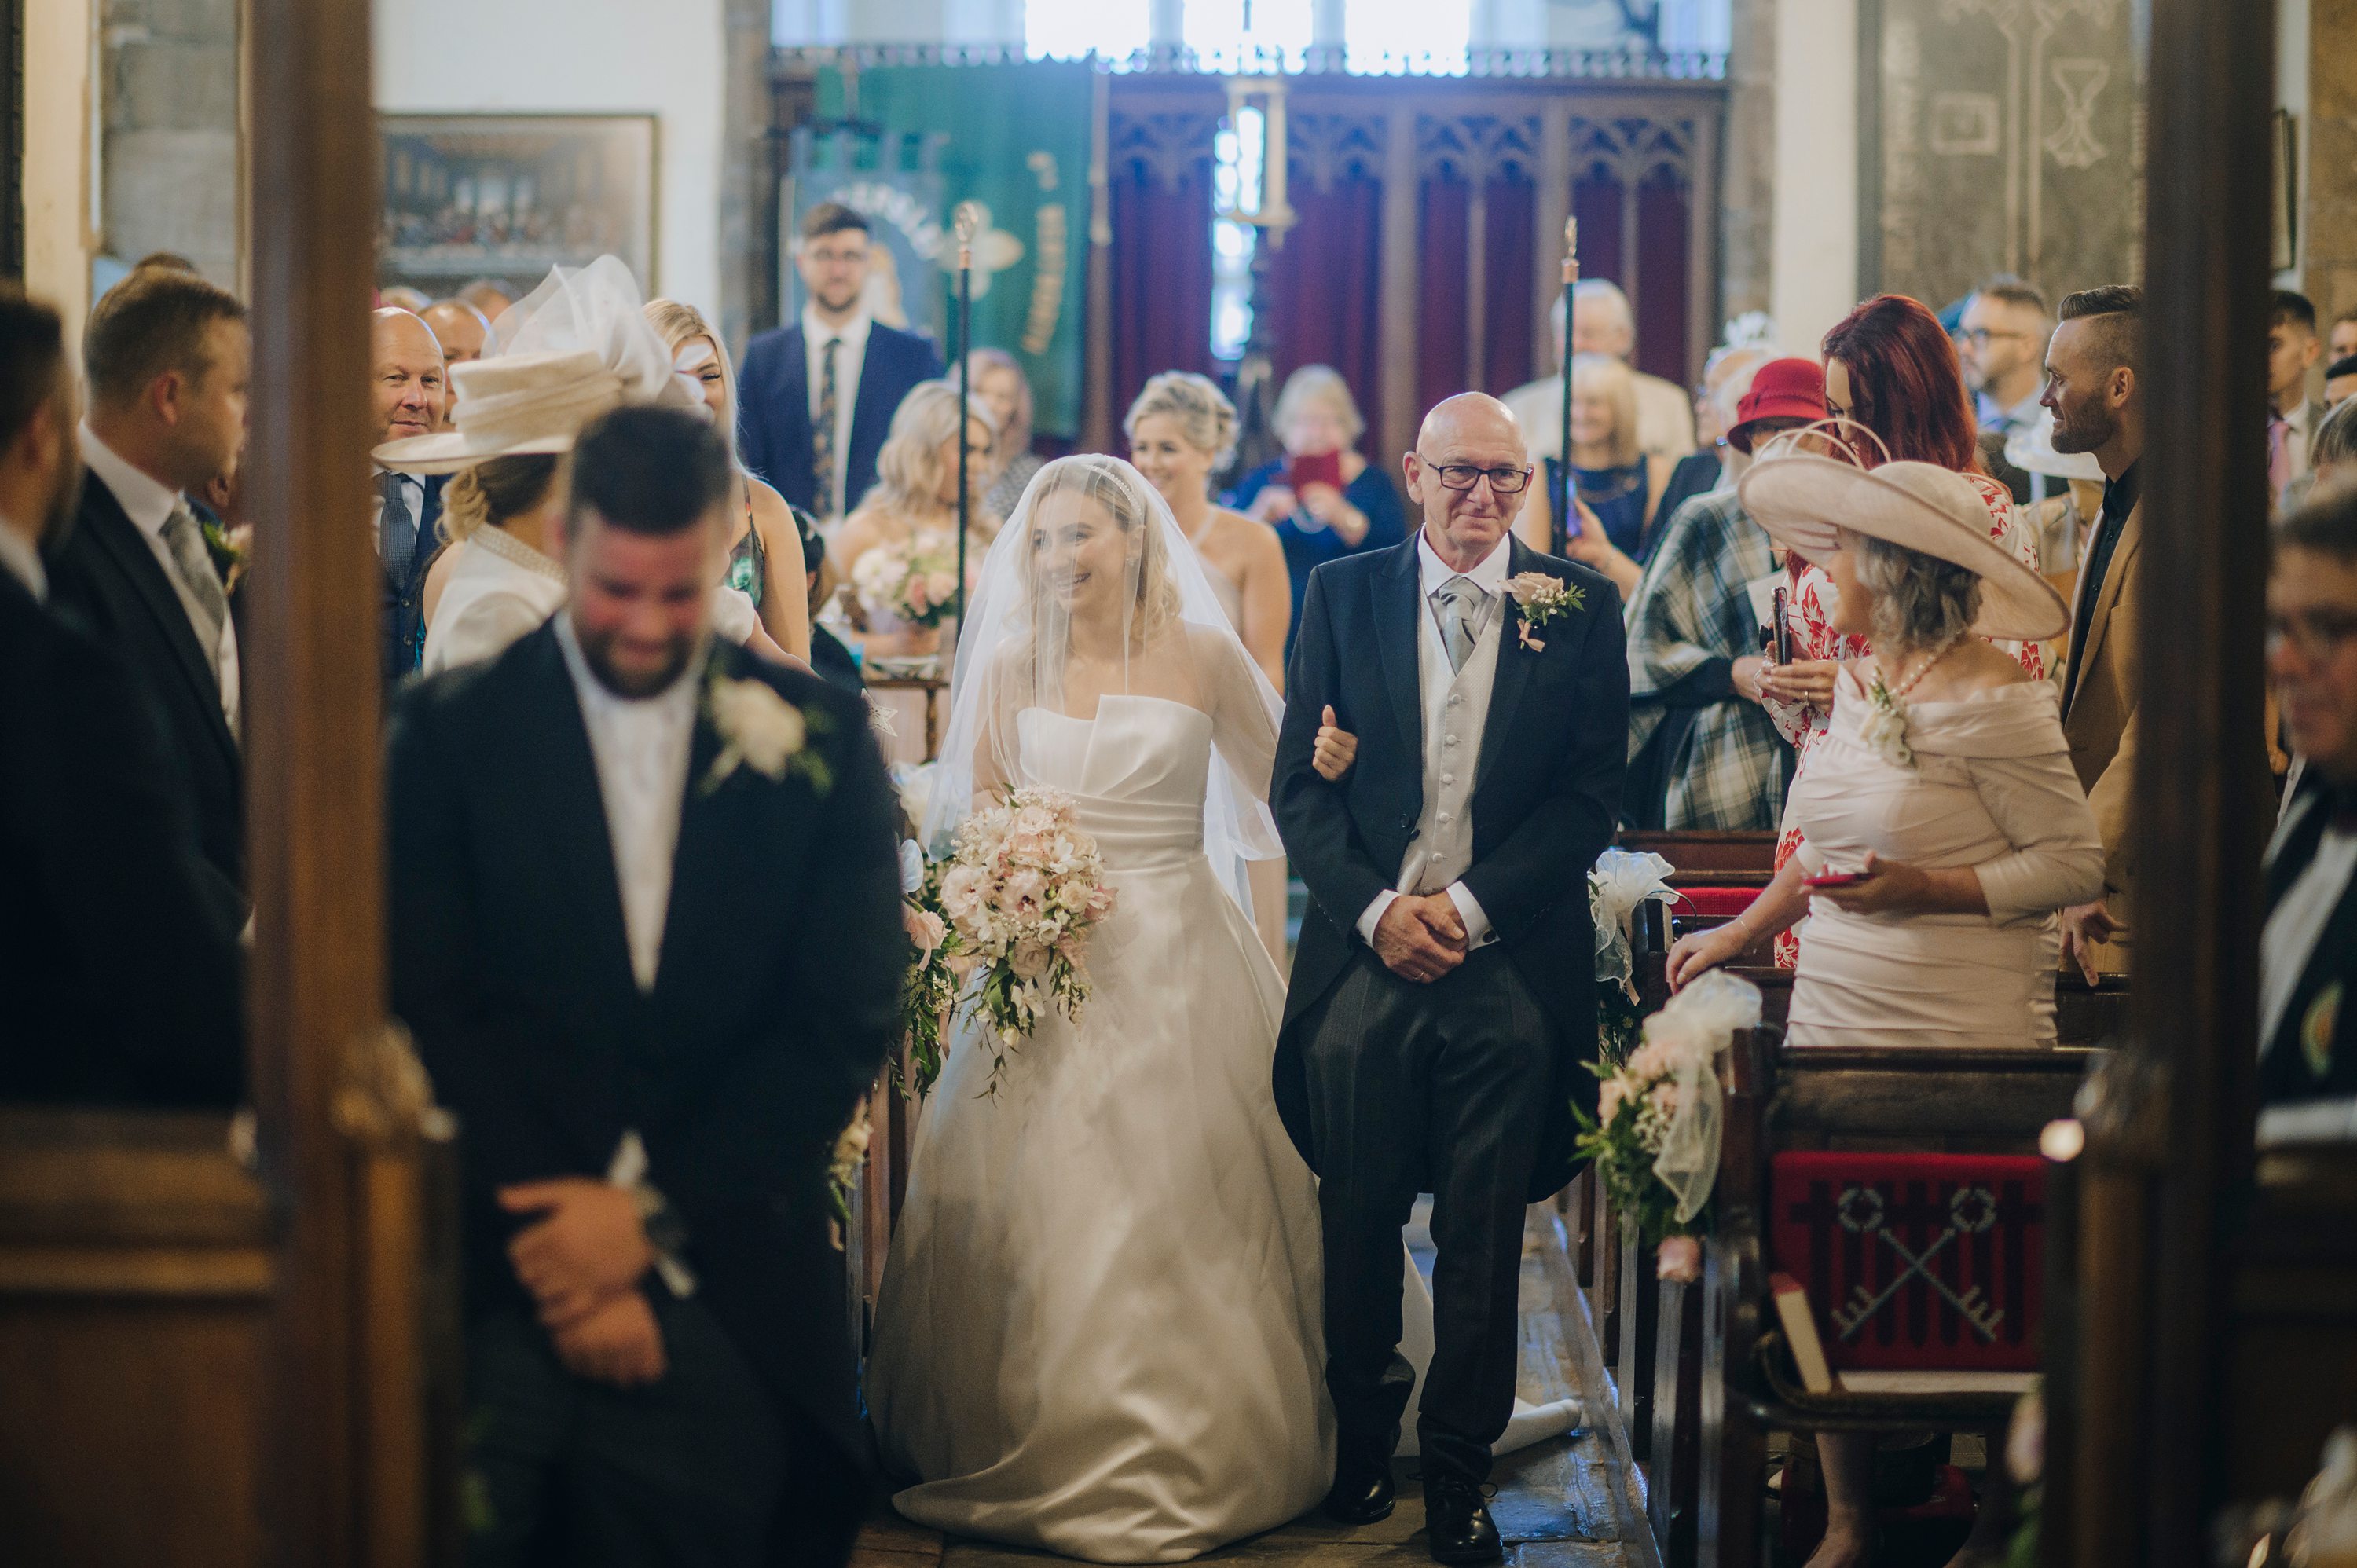 Bagden Hall weddings,Huddersfield wedding photos